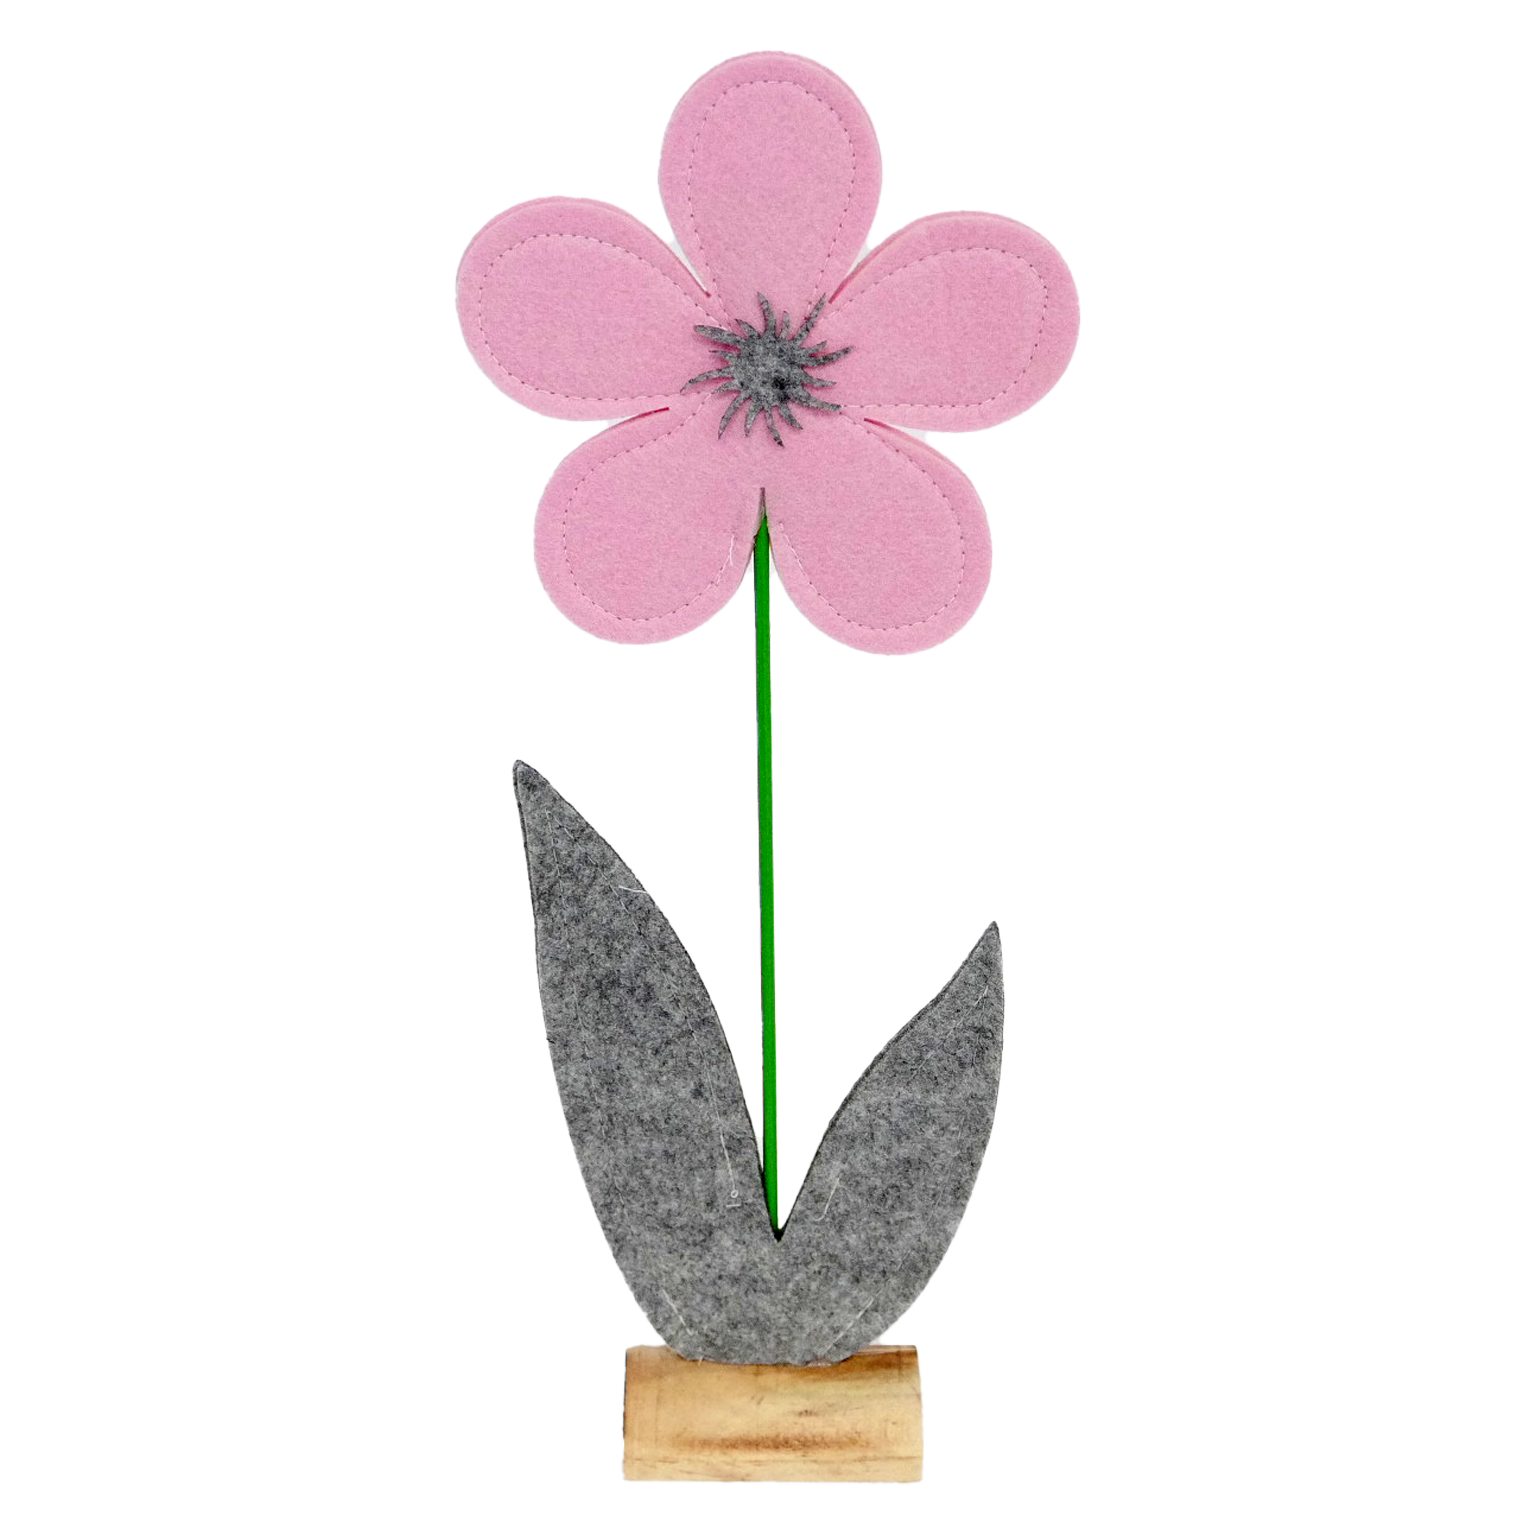 B&S Dekofigur Dekofigur Blume aus Filz rosa/grau auf Holzfuß 31 cm hoch | Dekofiguren